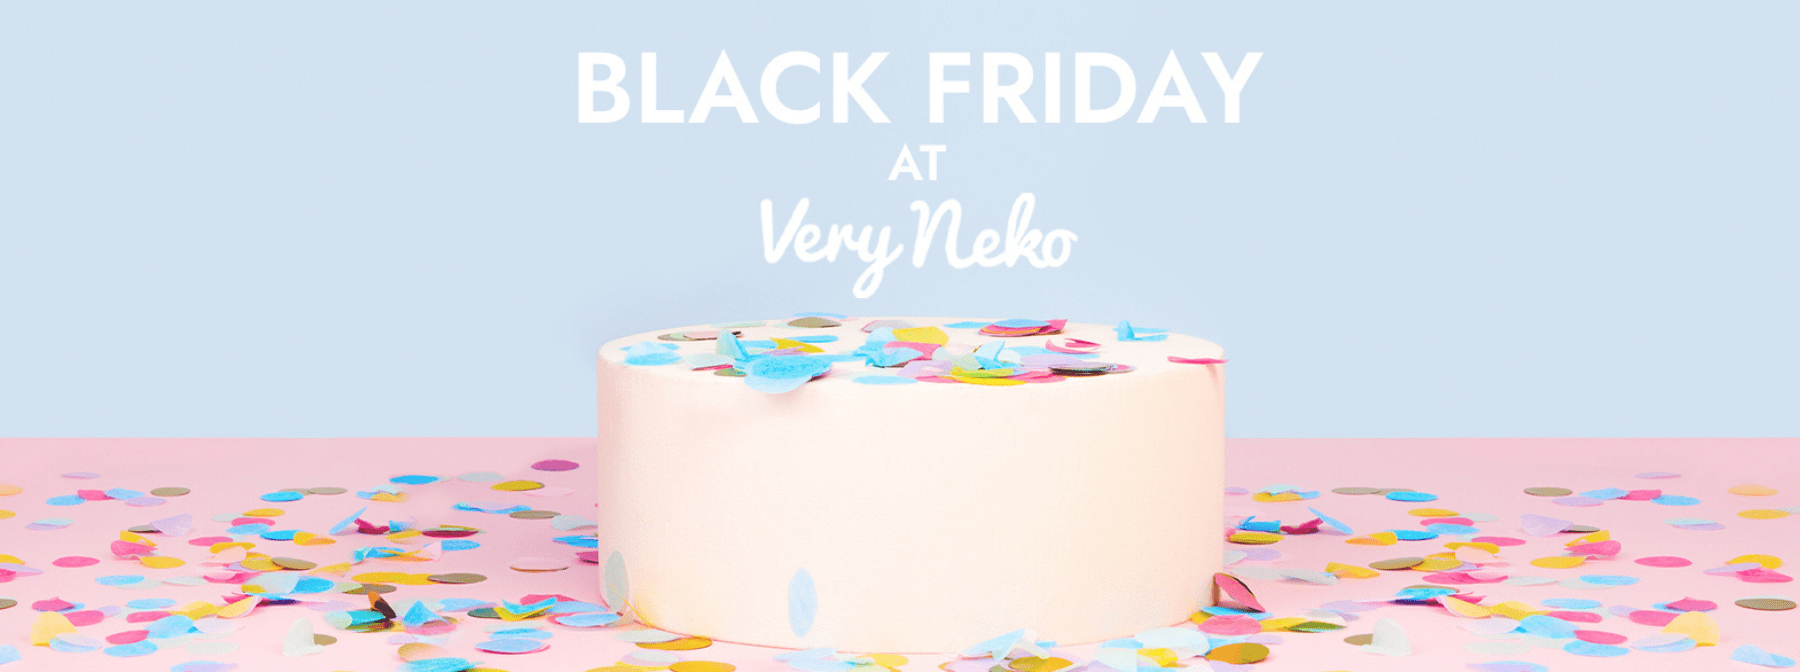 Black Friday At VeryNeko: What's Happening